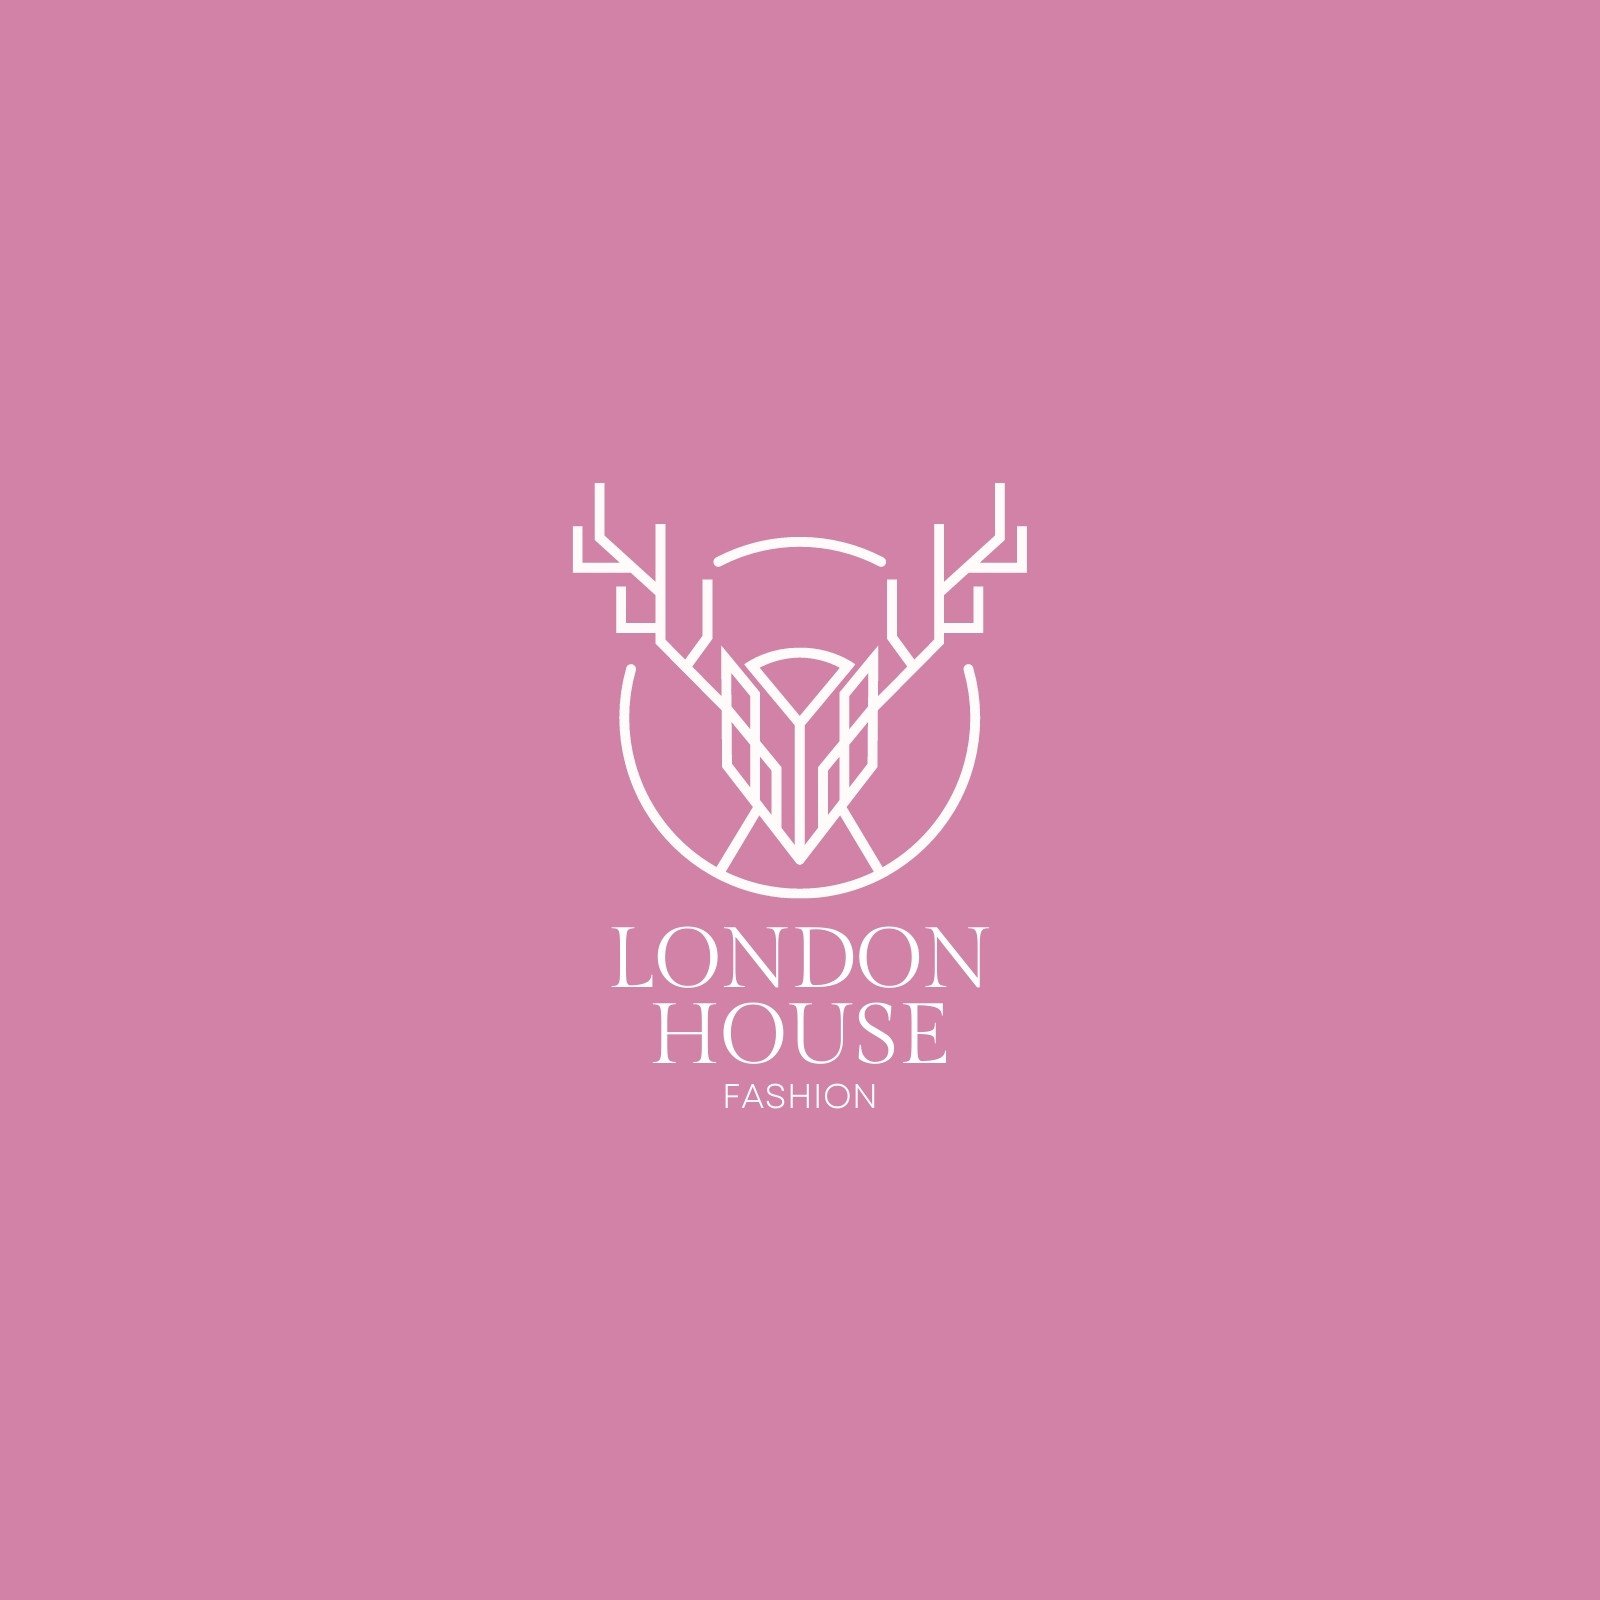 house of fashion brand logos